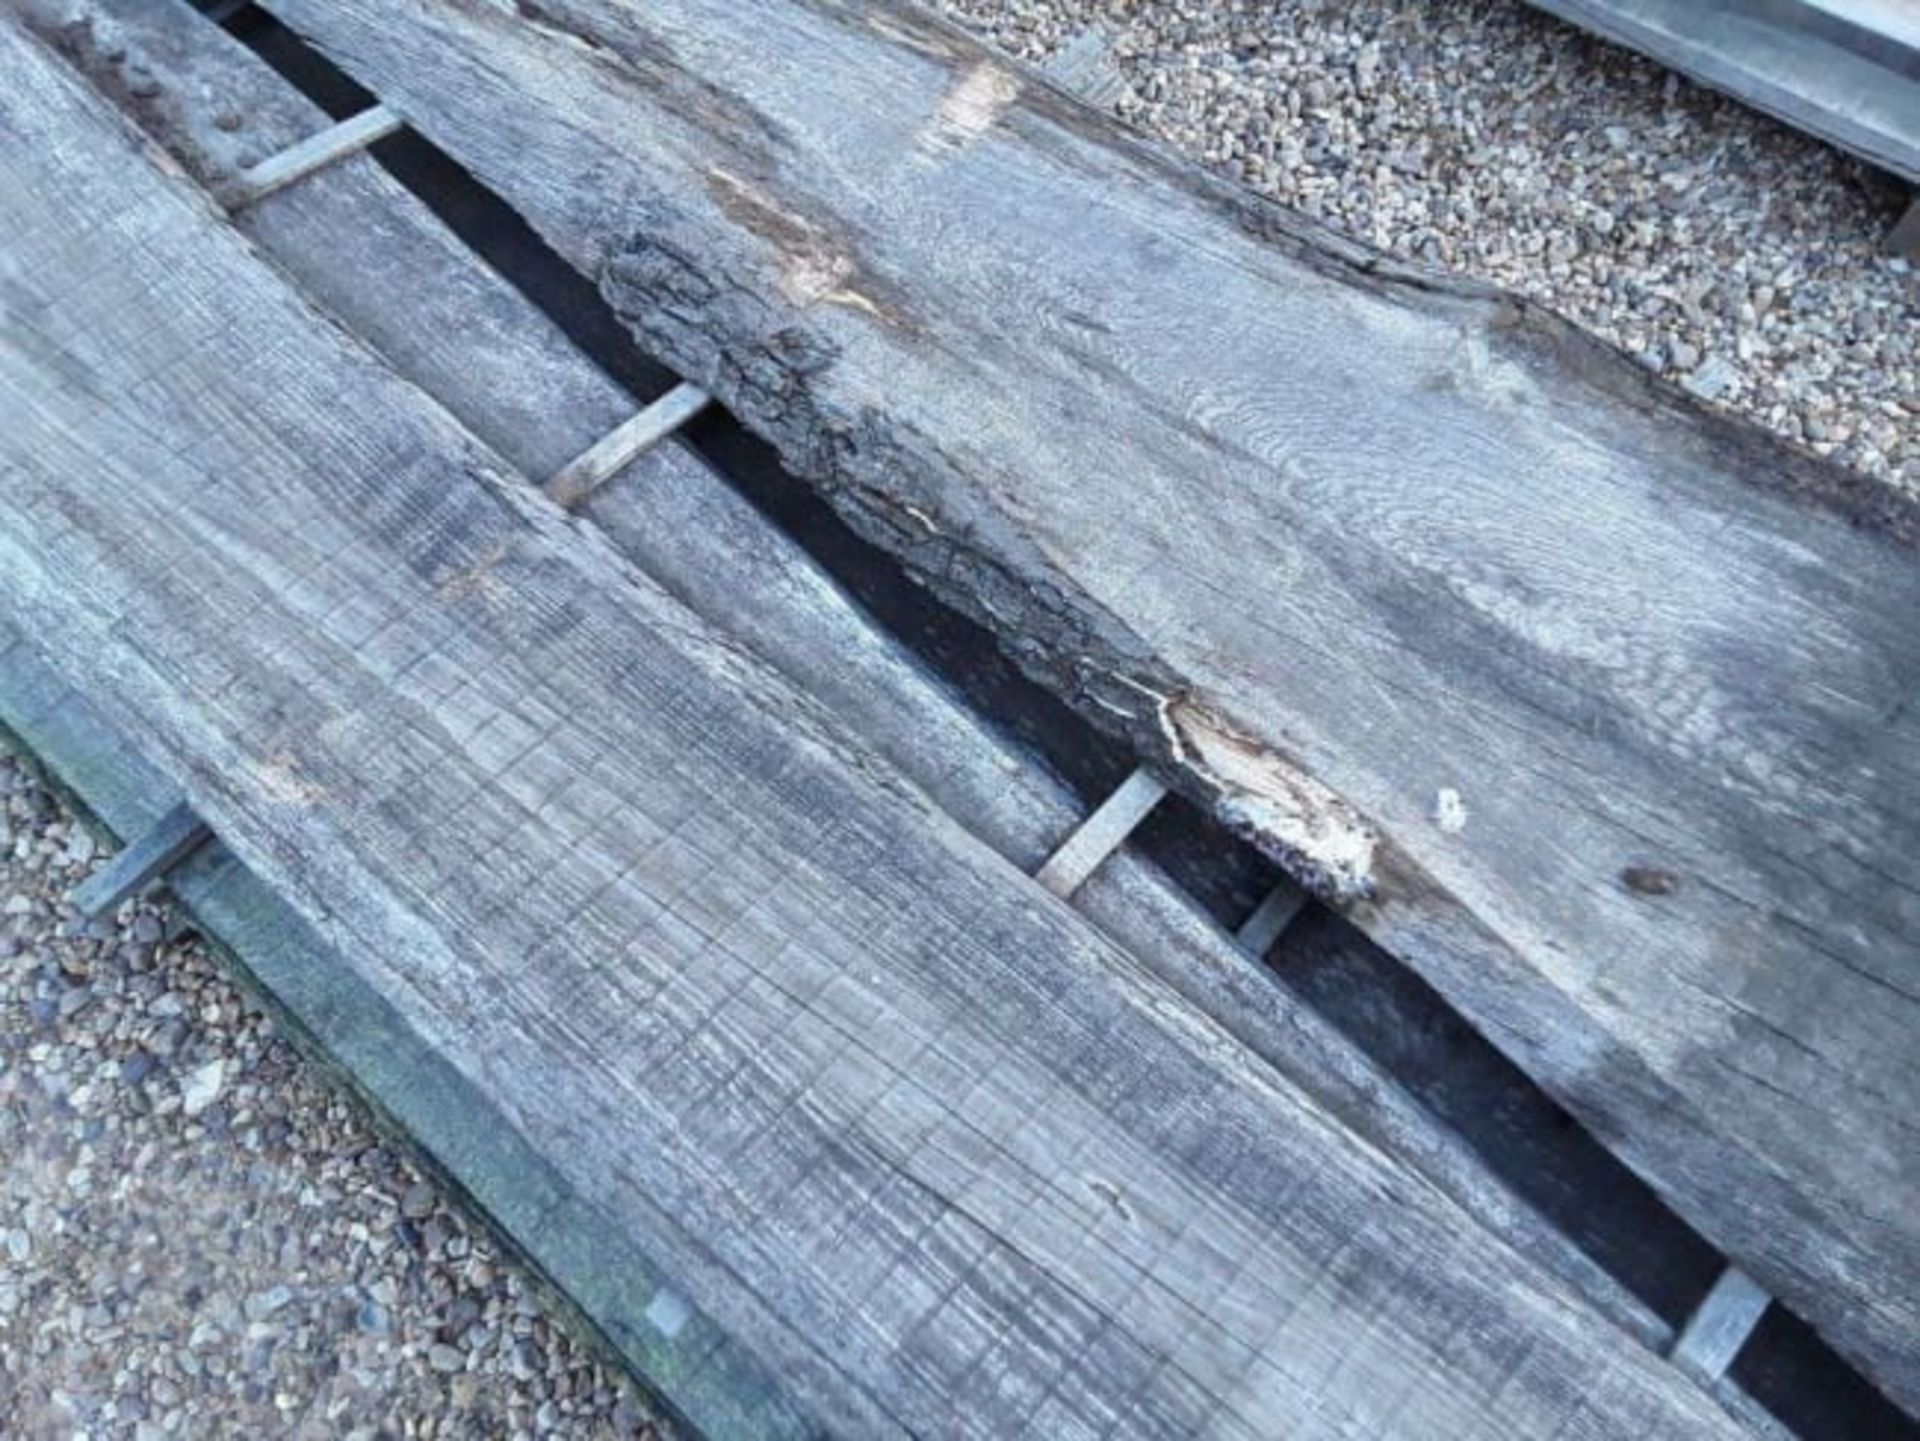 10 x Hardwood Air Dried Sawn Timber Waney Edge / Live Edge English Oak Boards / Planks - Image 5 of 6